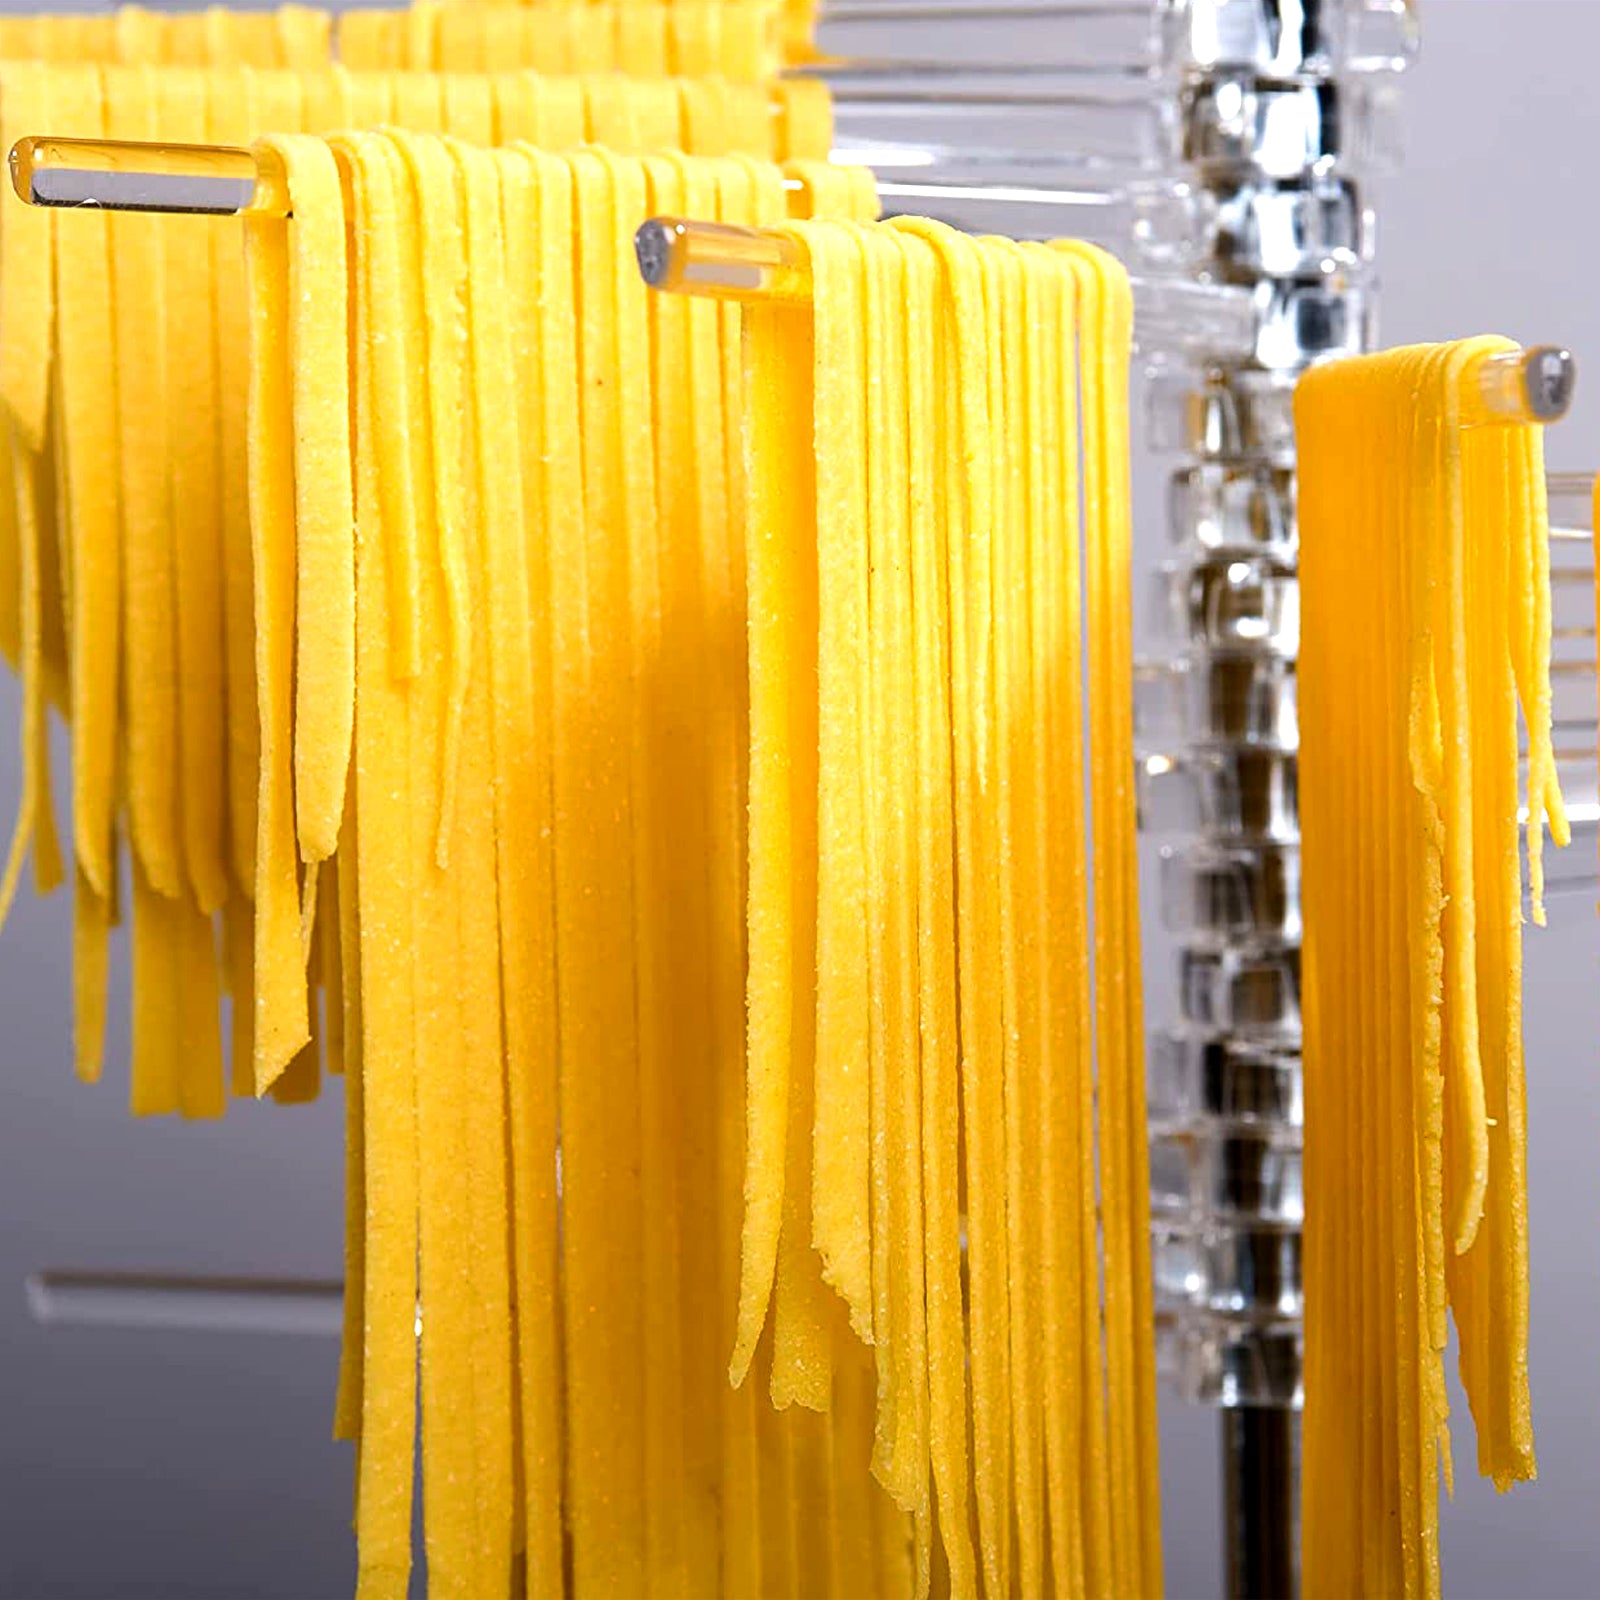 AMOS Spiral Spaghetti Pasta Drying Rack